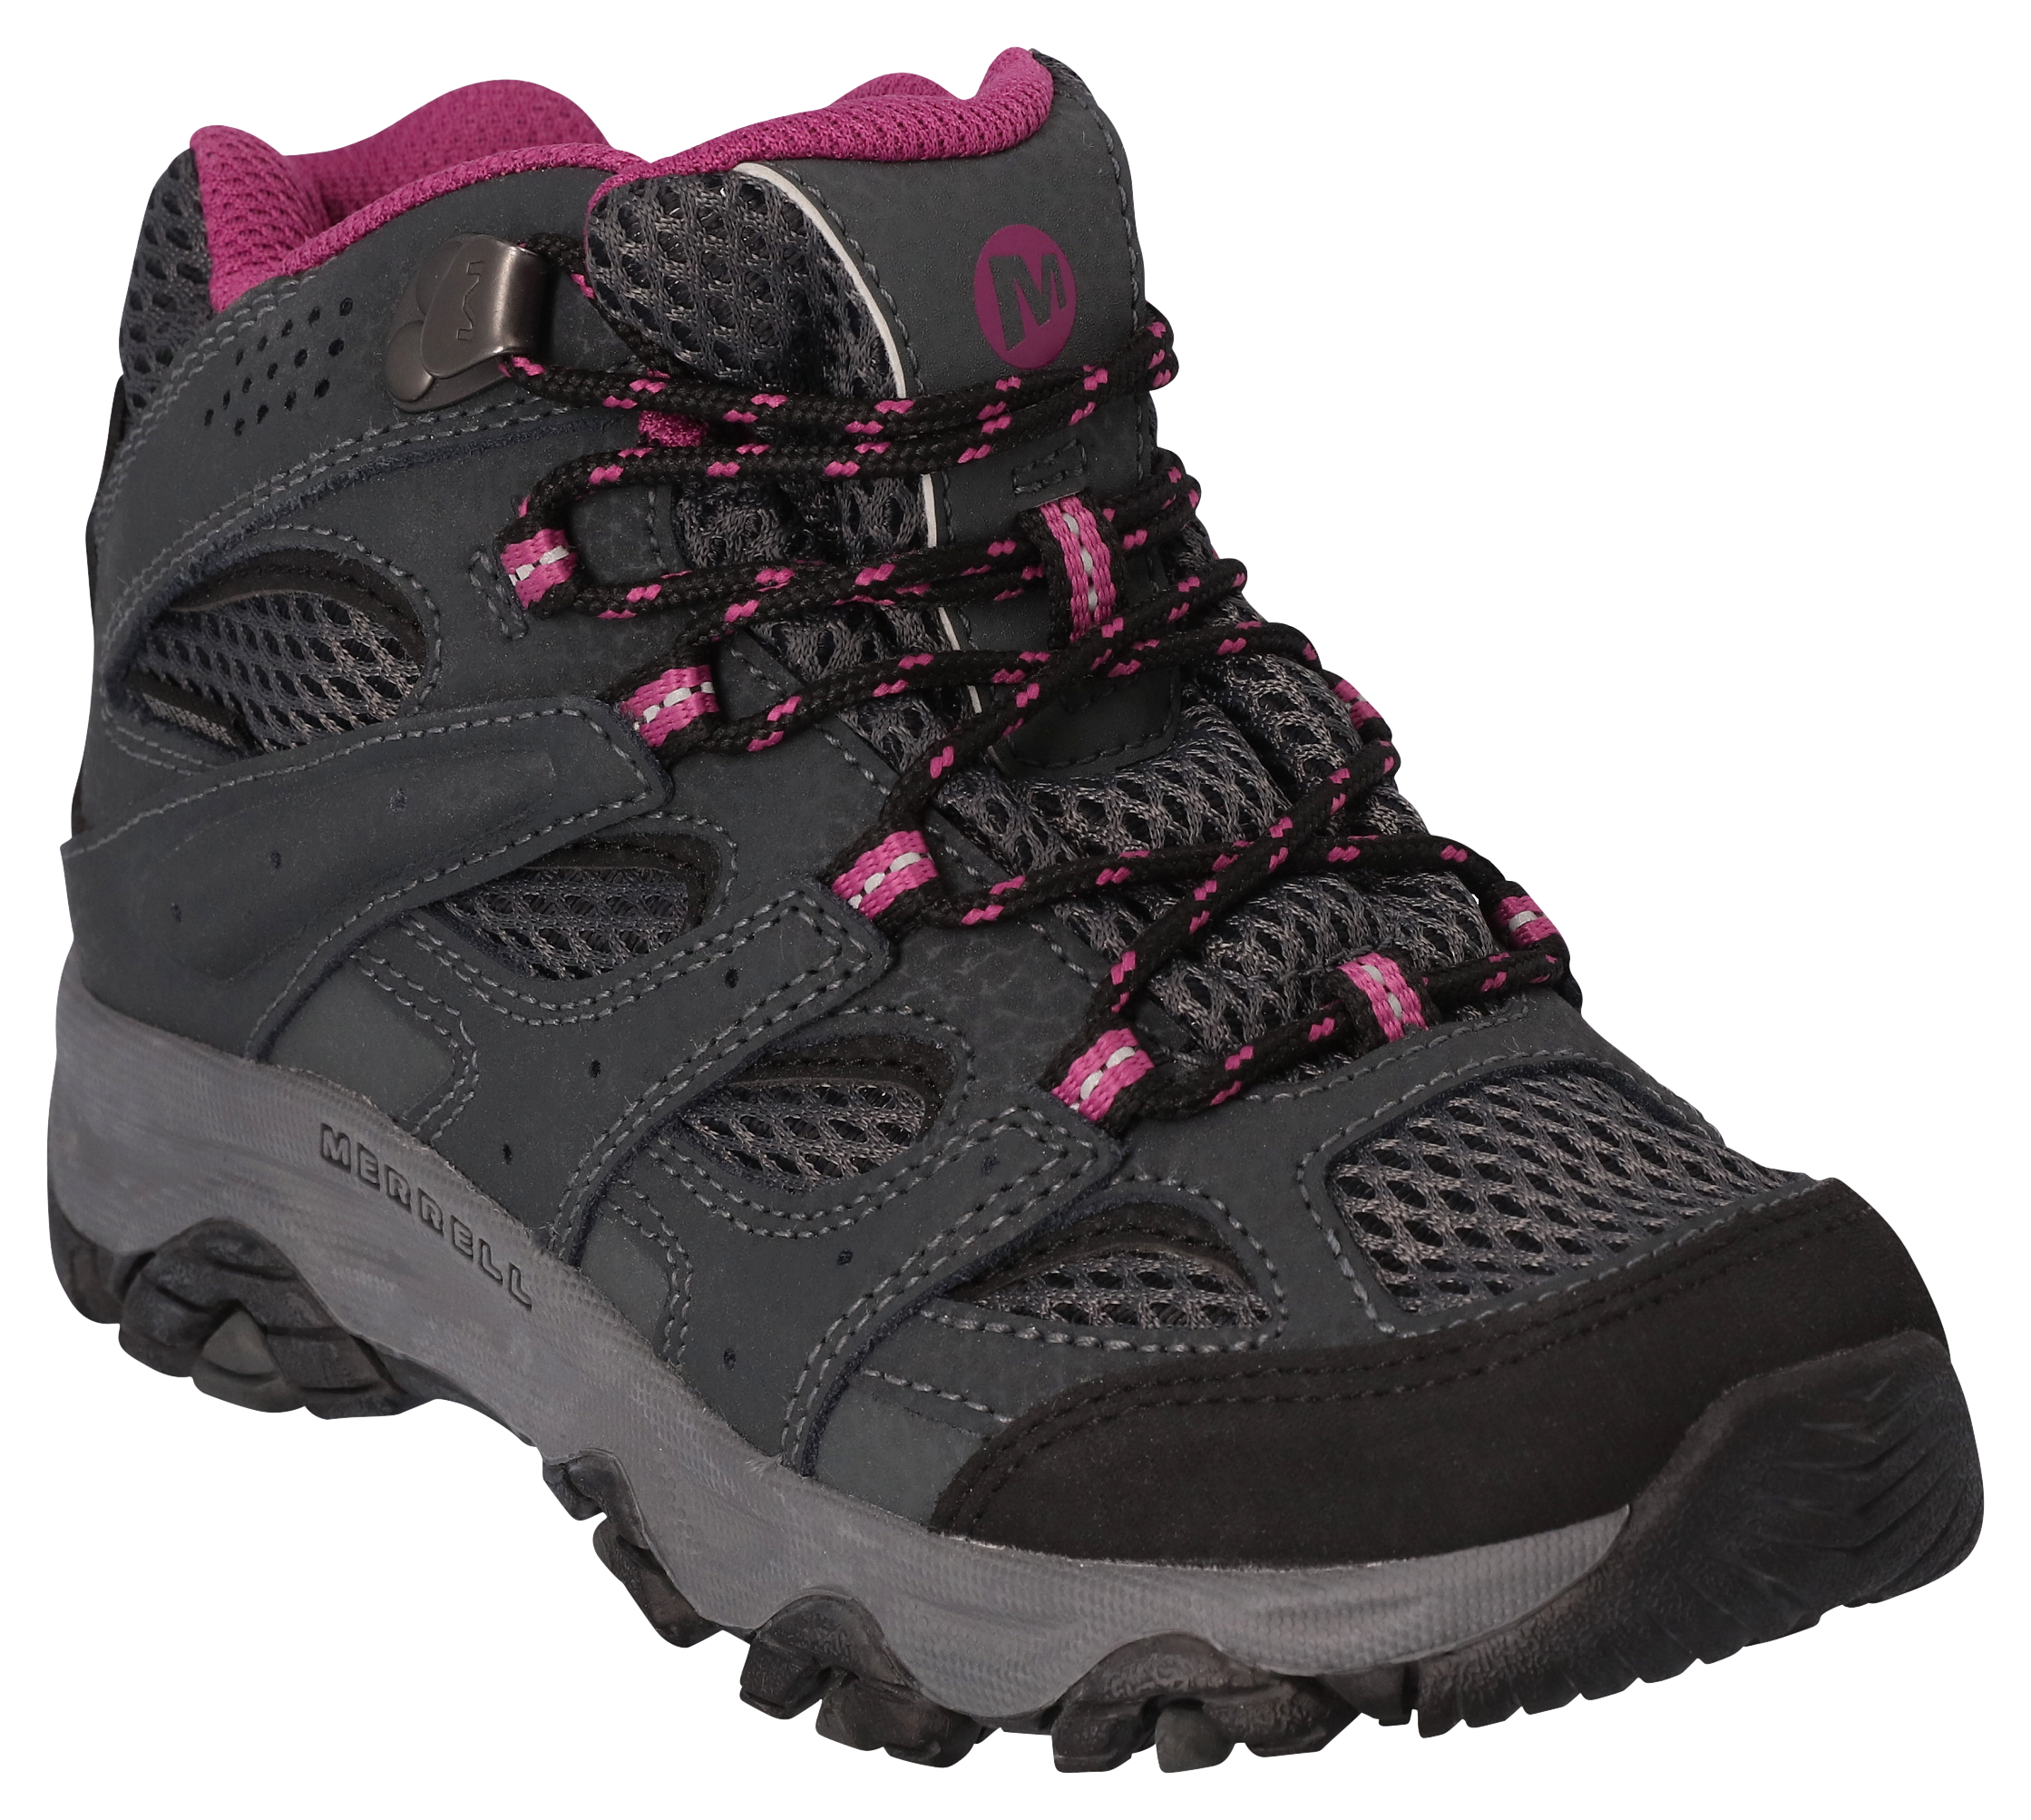 Merrell Moab III Mid Waterproof Hiking Boots for Kids - Granite - 1 Kids